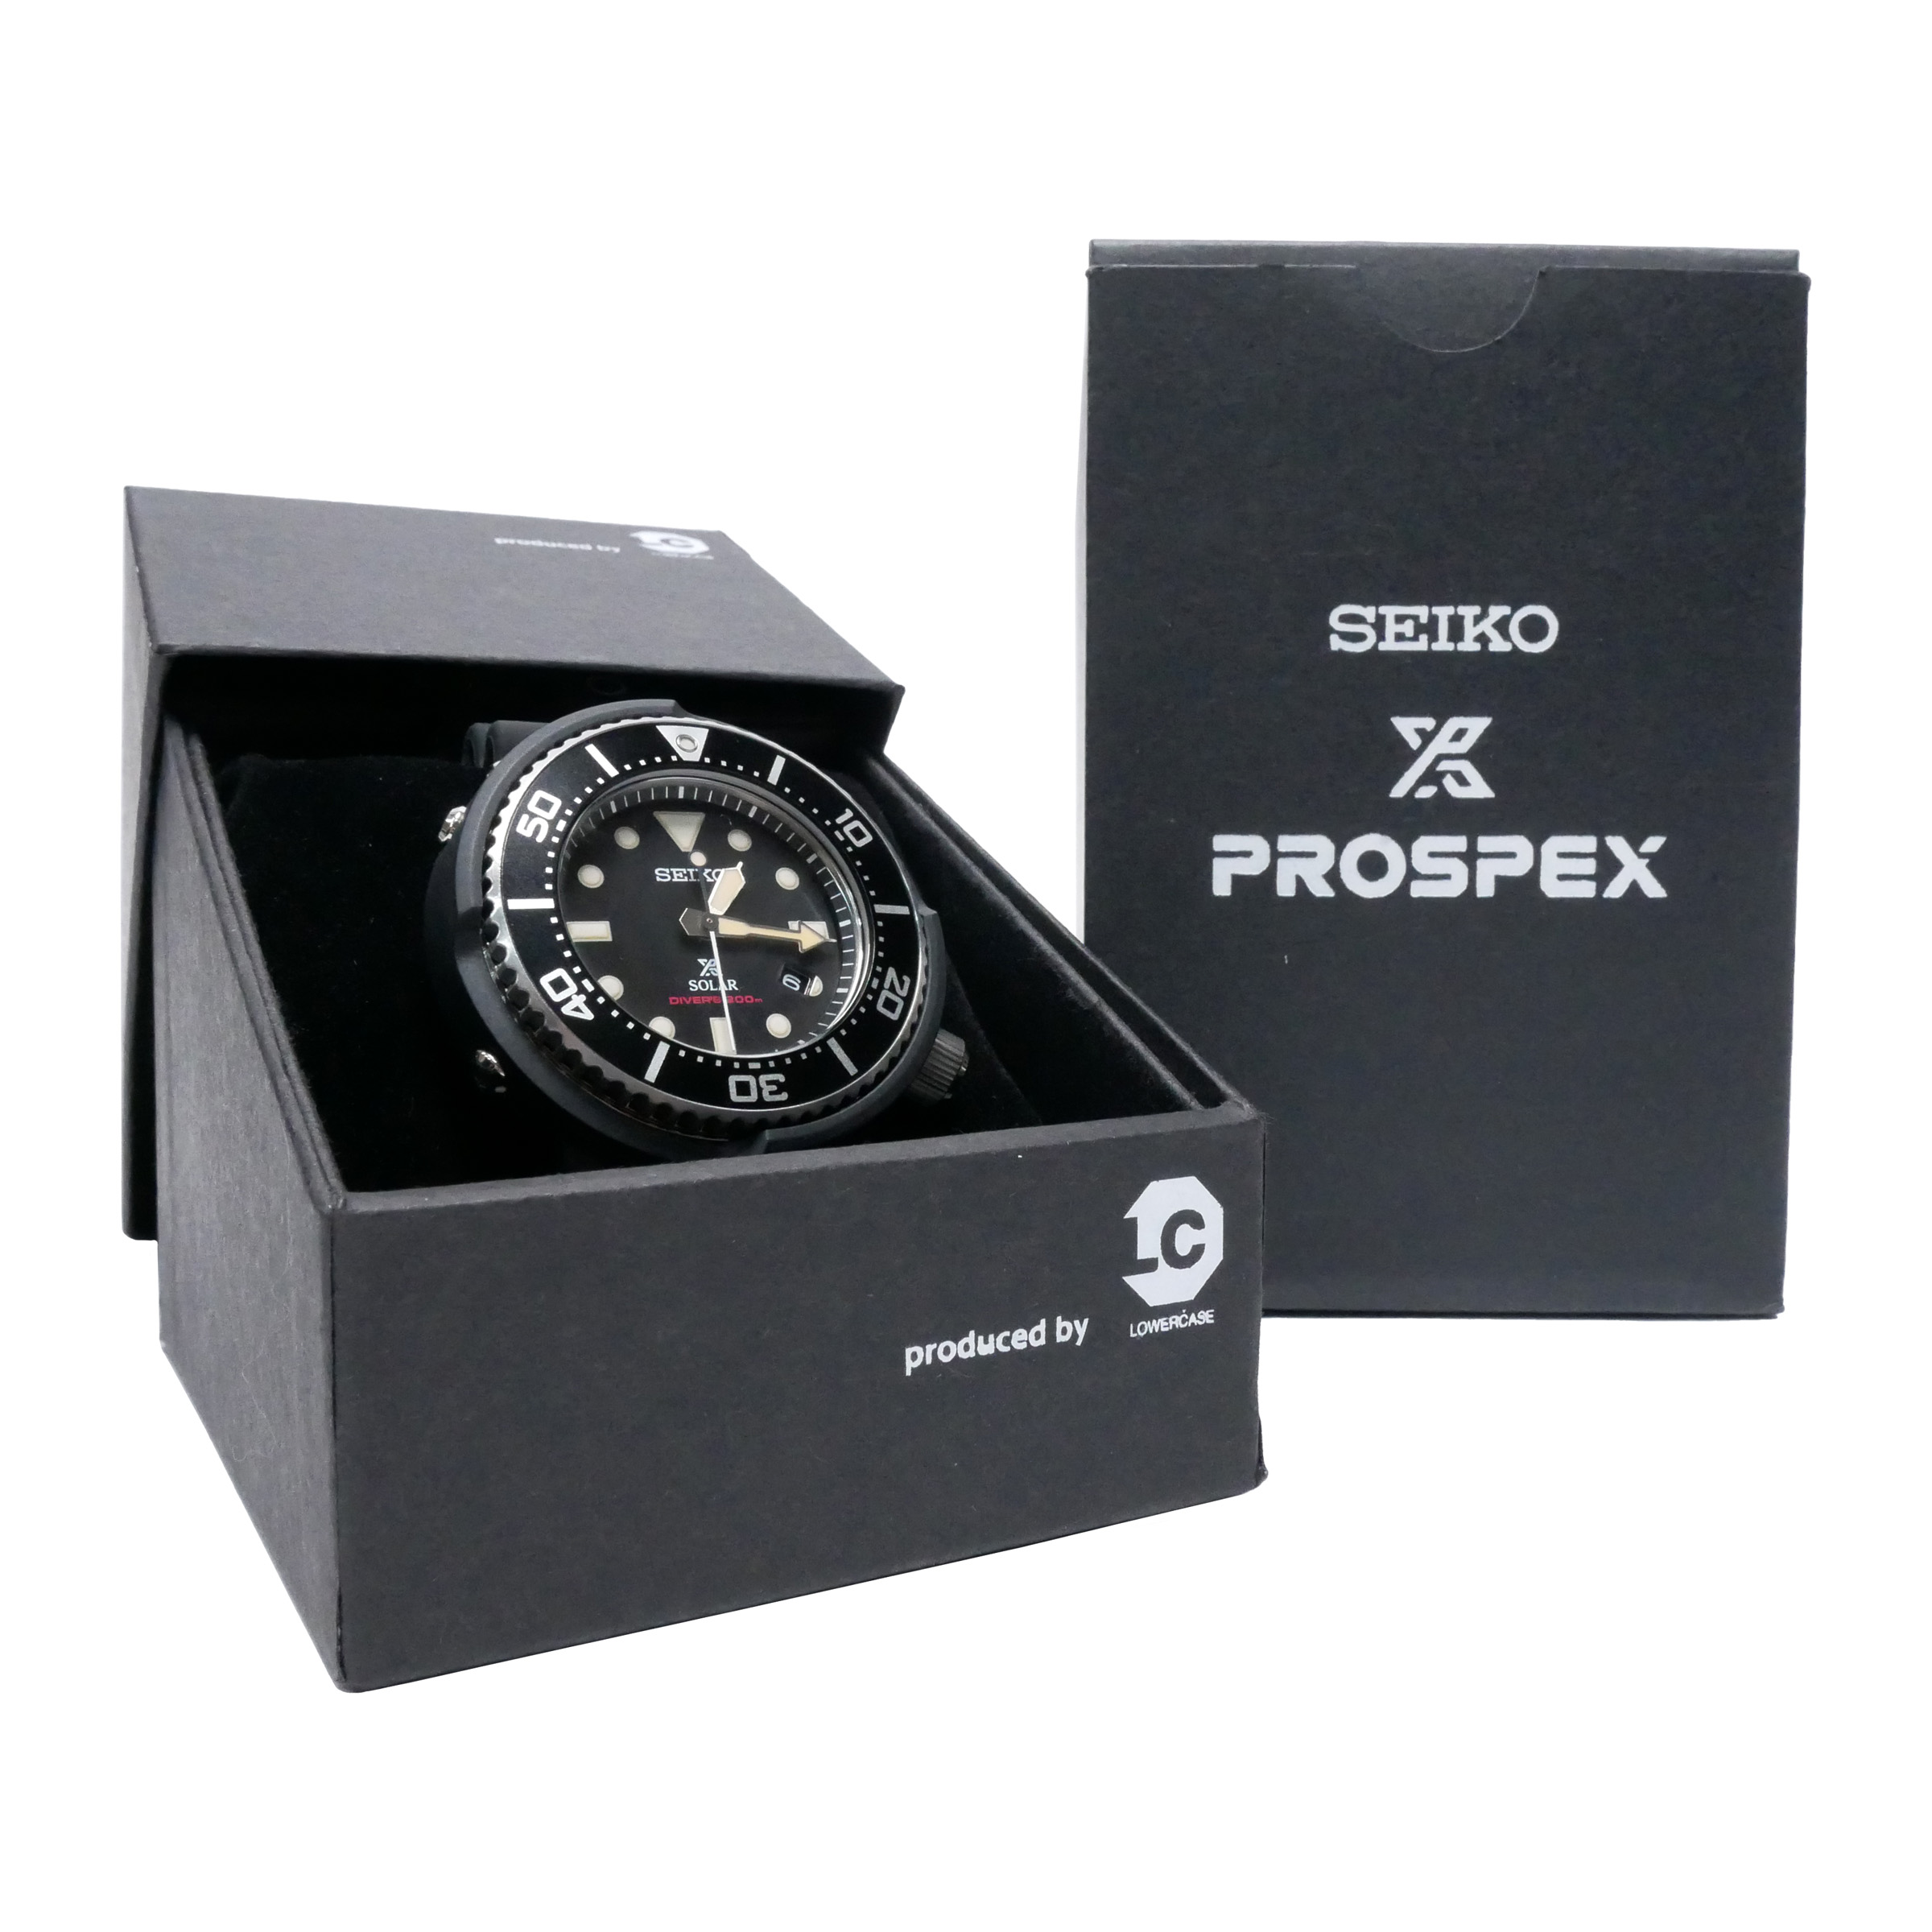  SEIKO セイコー PROSPEX Diver Scuba ダイバースキューバ ダイバーウォッチ 時計 腕時計 メンズ ソーラー 200ｍ防水 丸型 黒文字盤 ステンレス ラバー ブラック シルバー SBDN043 V147-0BG0